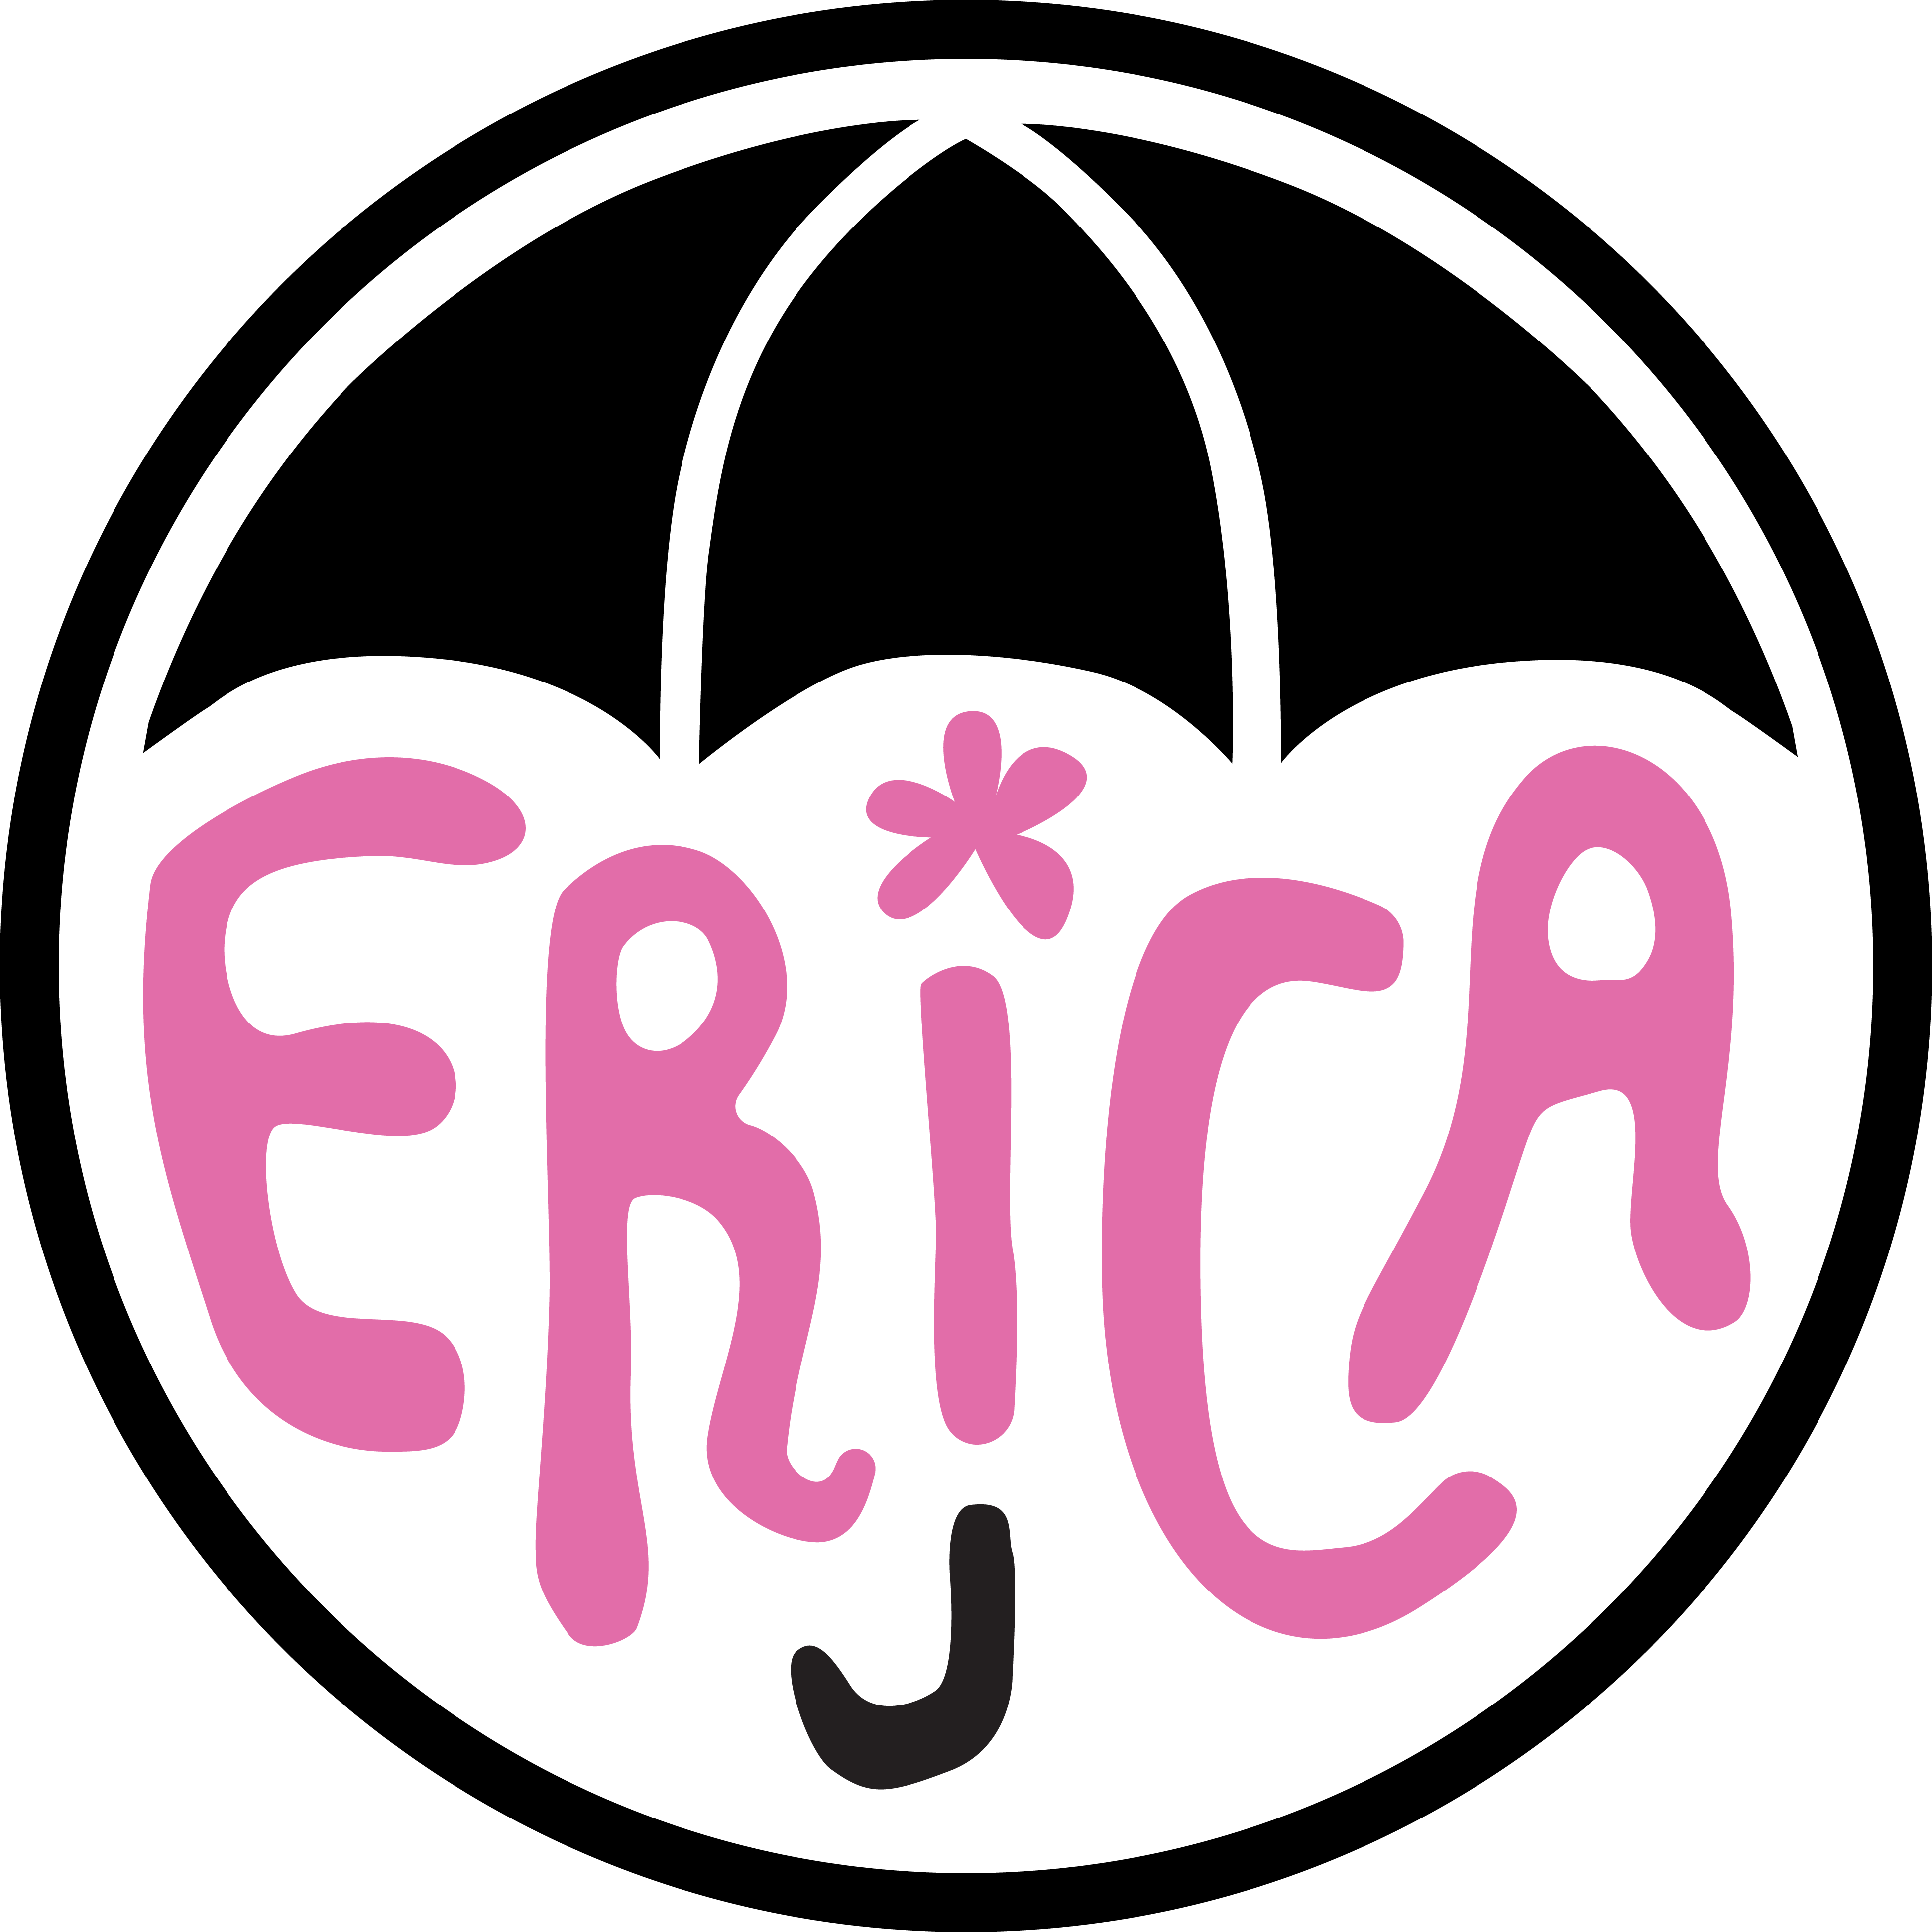 Erica Clr.png